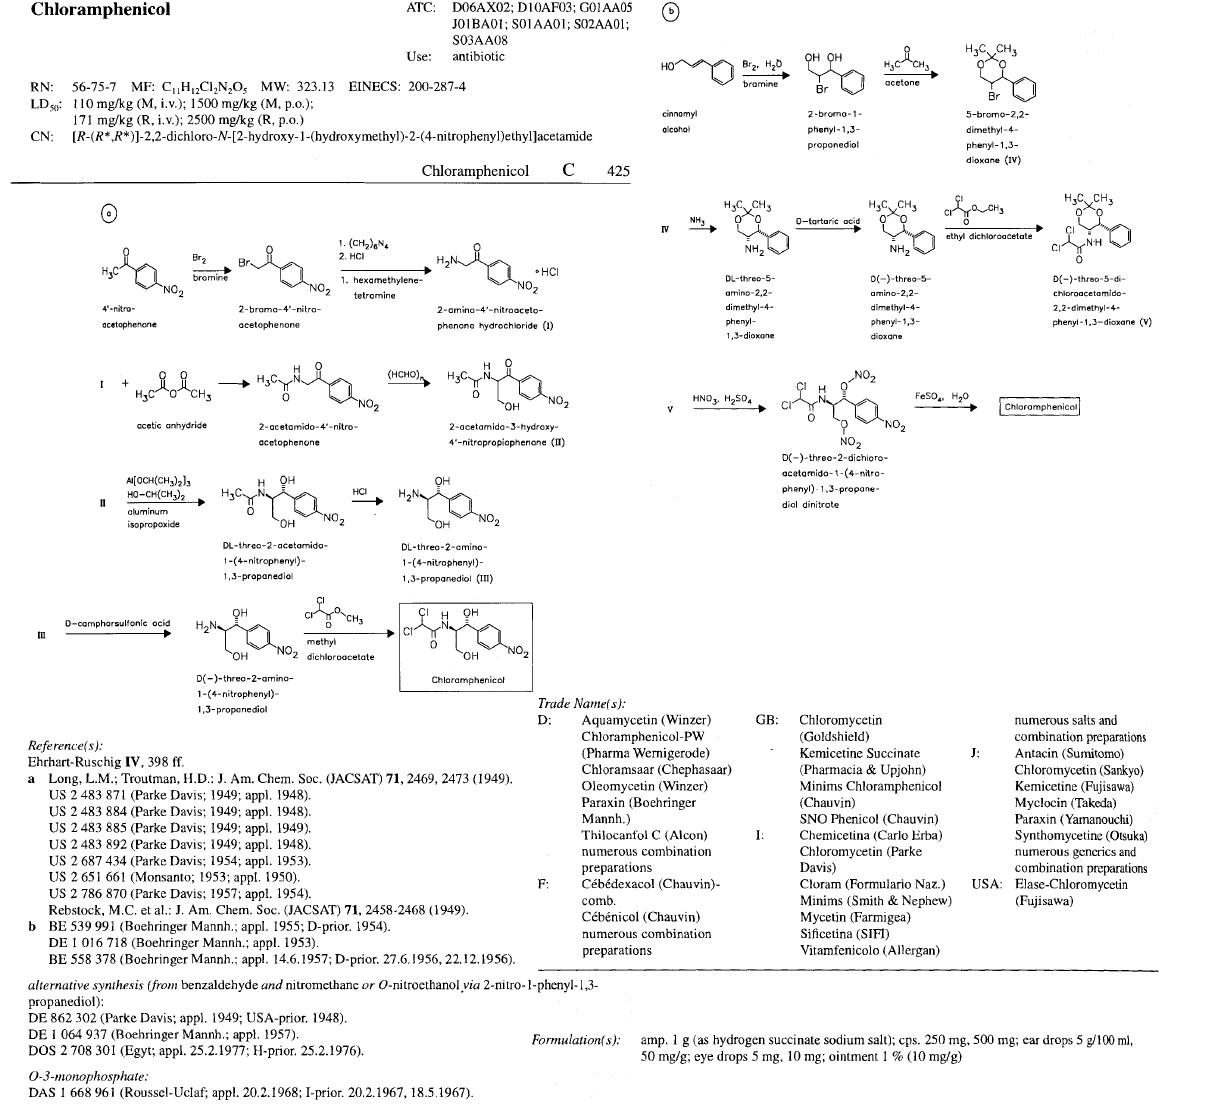 Chloroamphenicol.JPG - 192kB